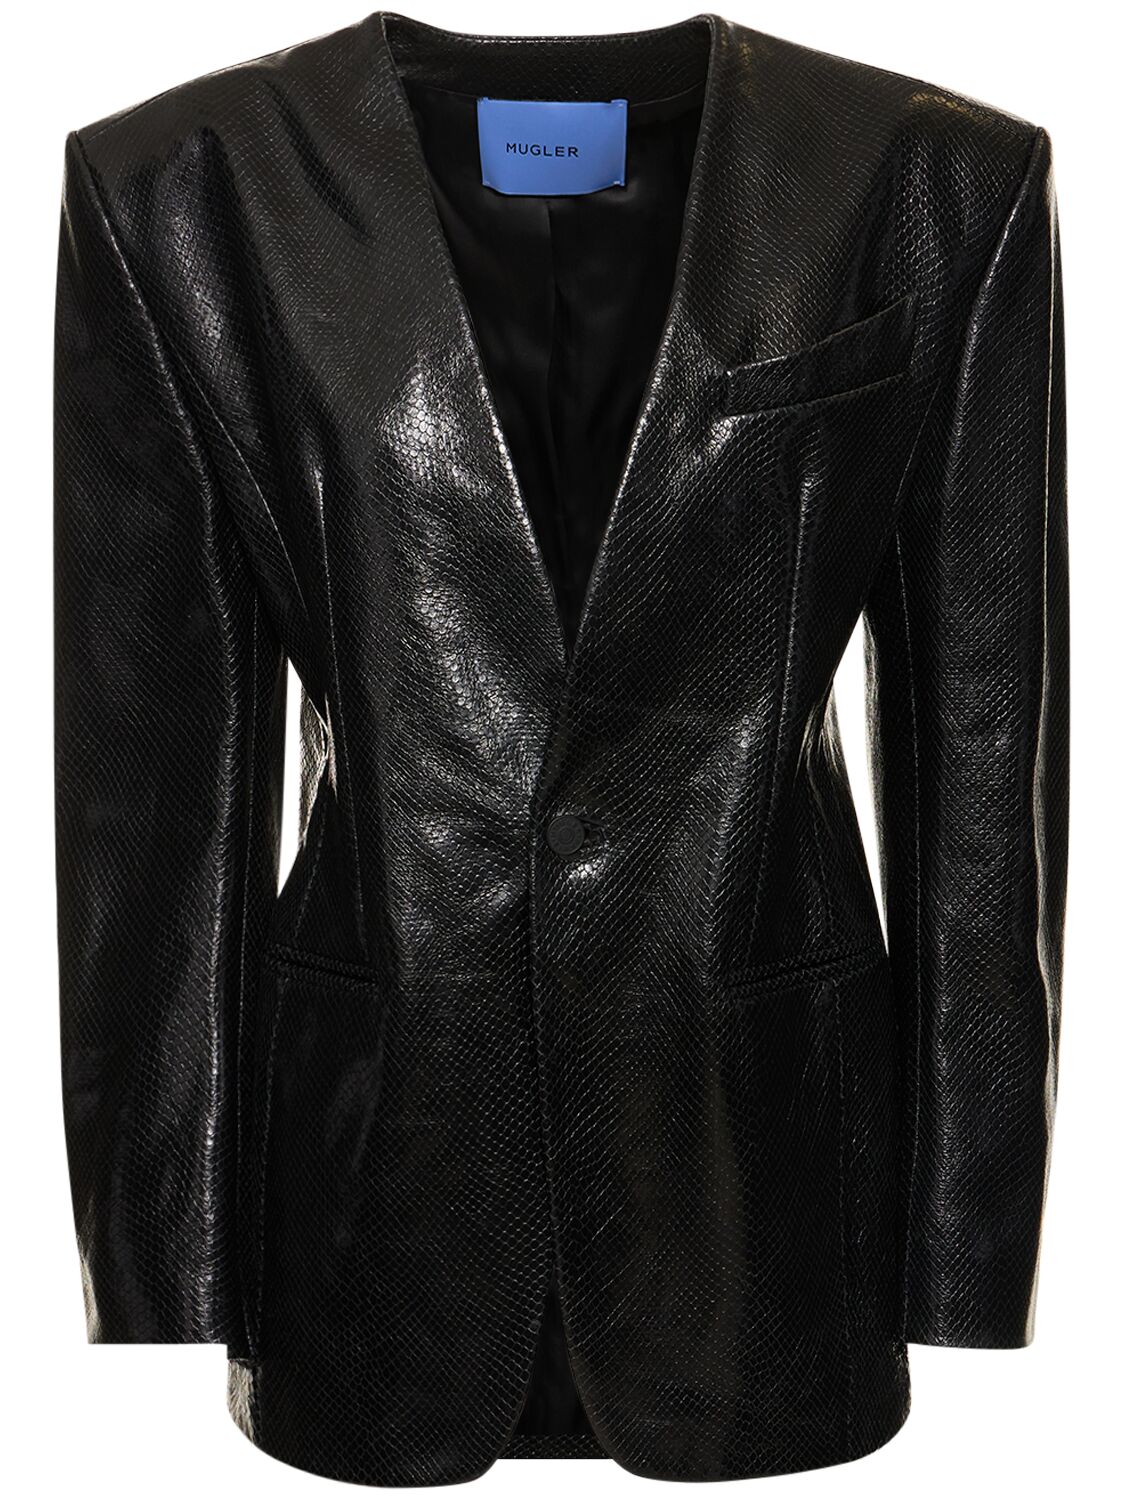 Image of Single Breasted Leather Jacket